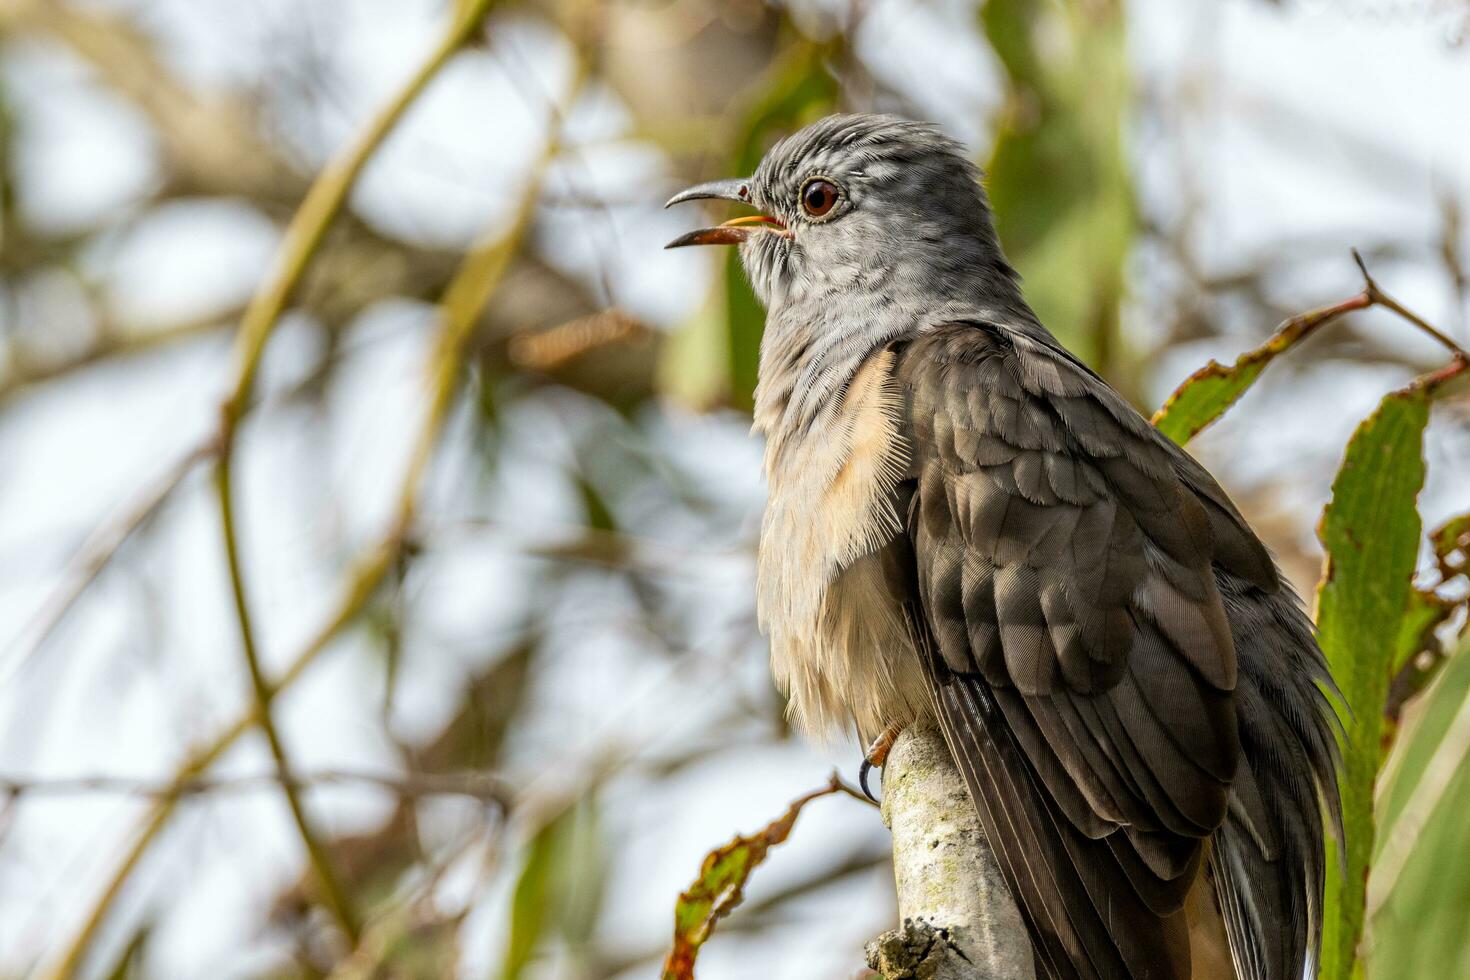 Brush Cuckoo in Australia photo